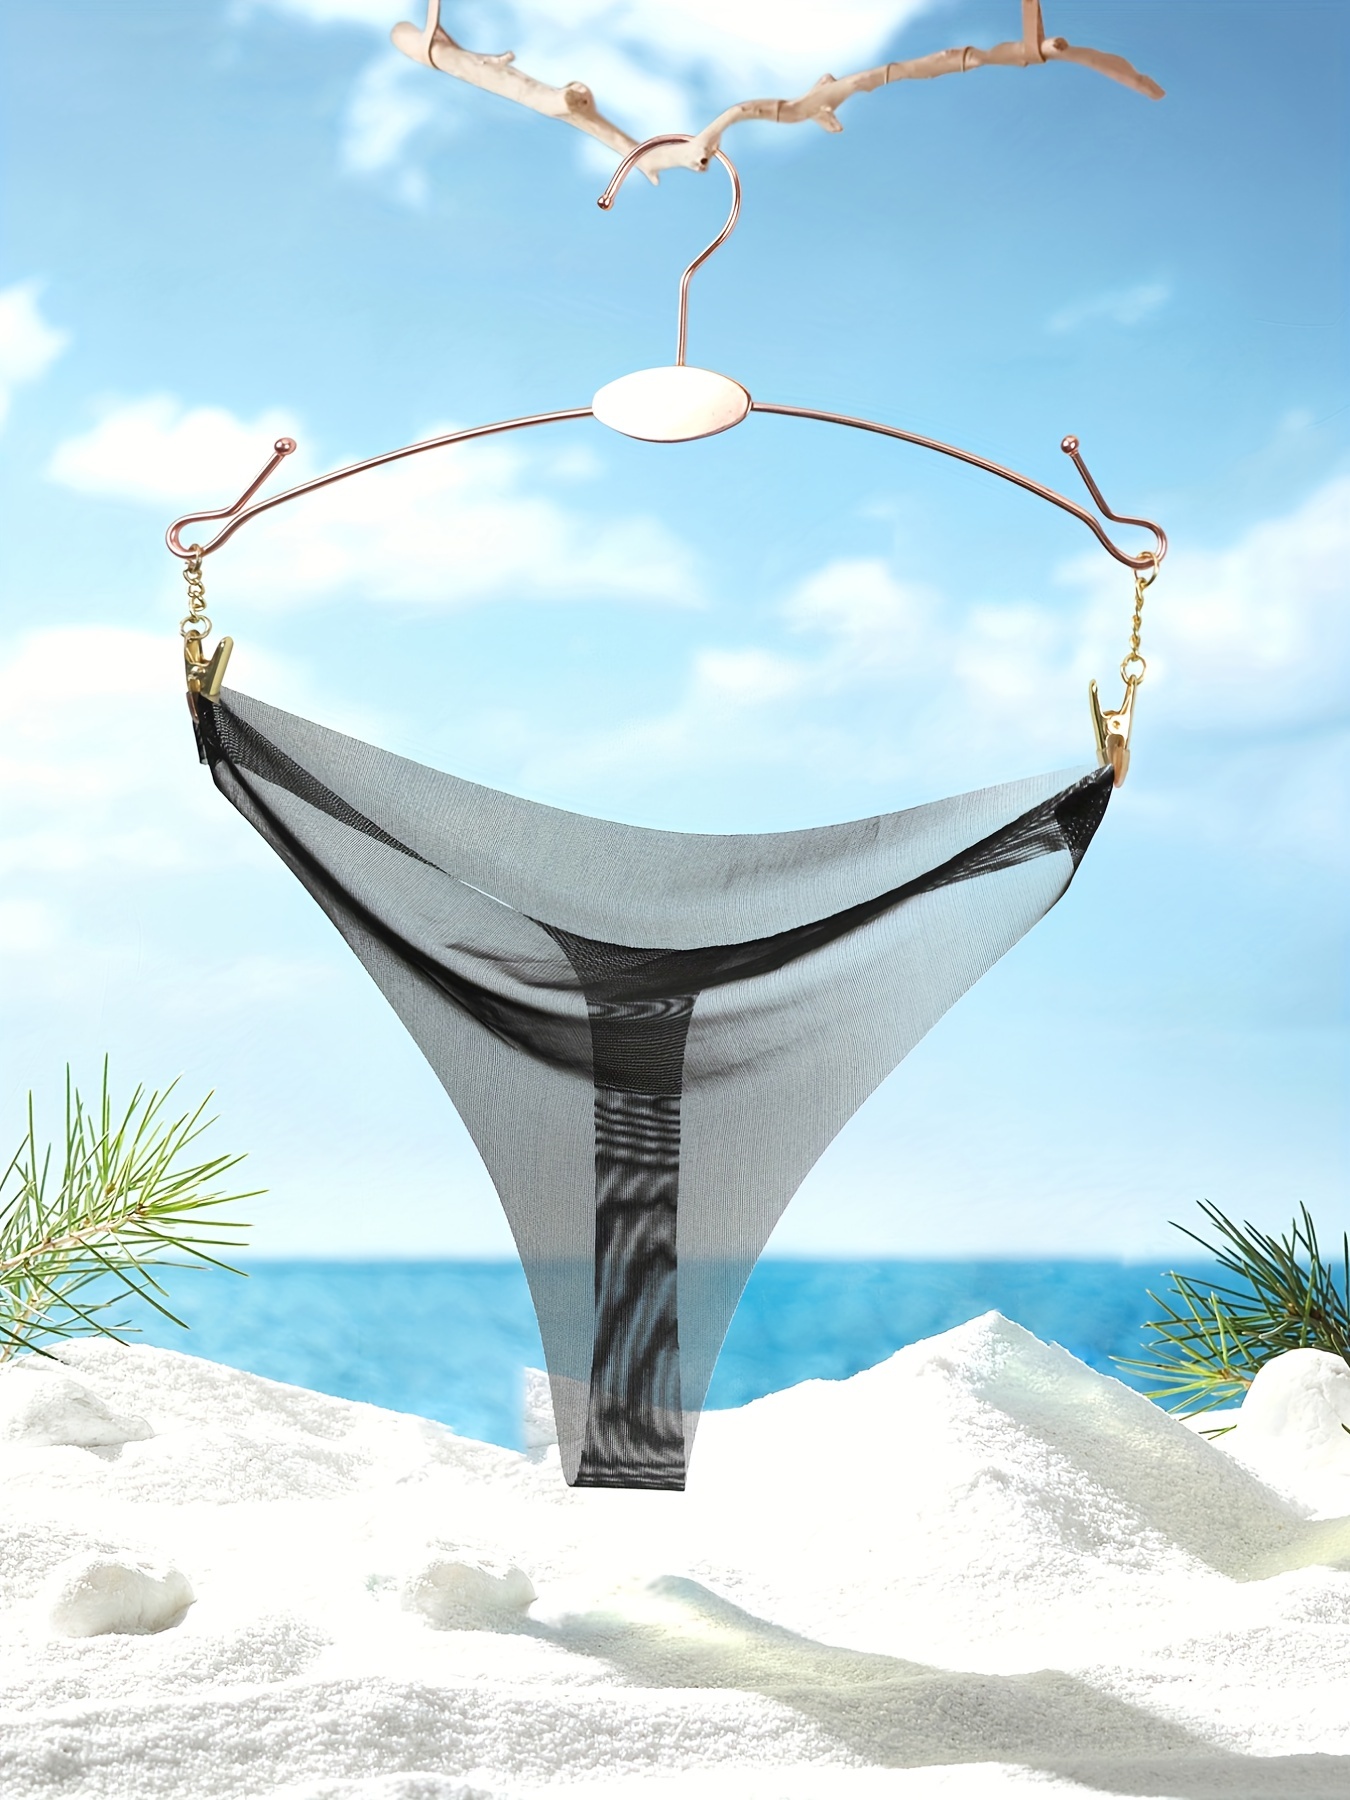 Seductive Mesh Thongs, See Through Intimates Panties, Women's Sexy Lingerie  & Underwear